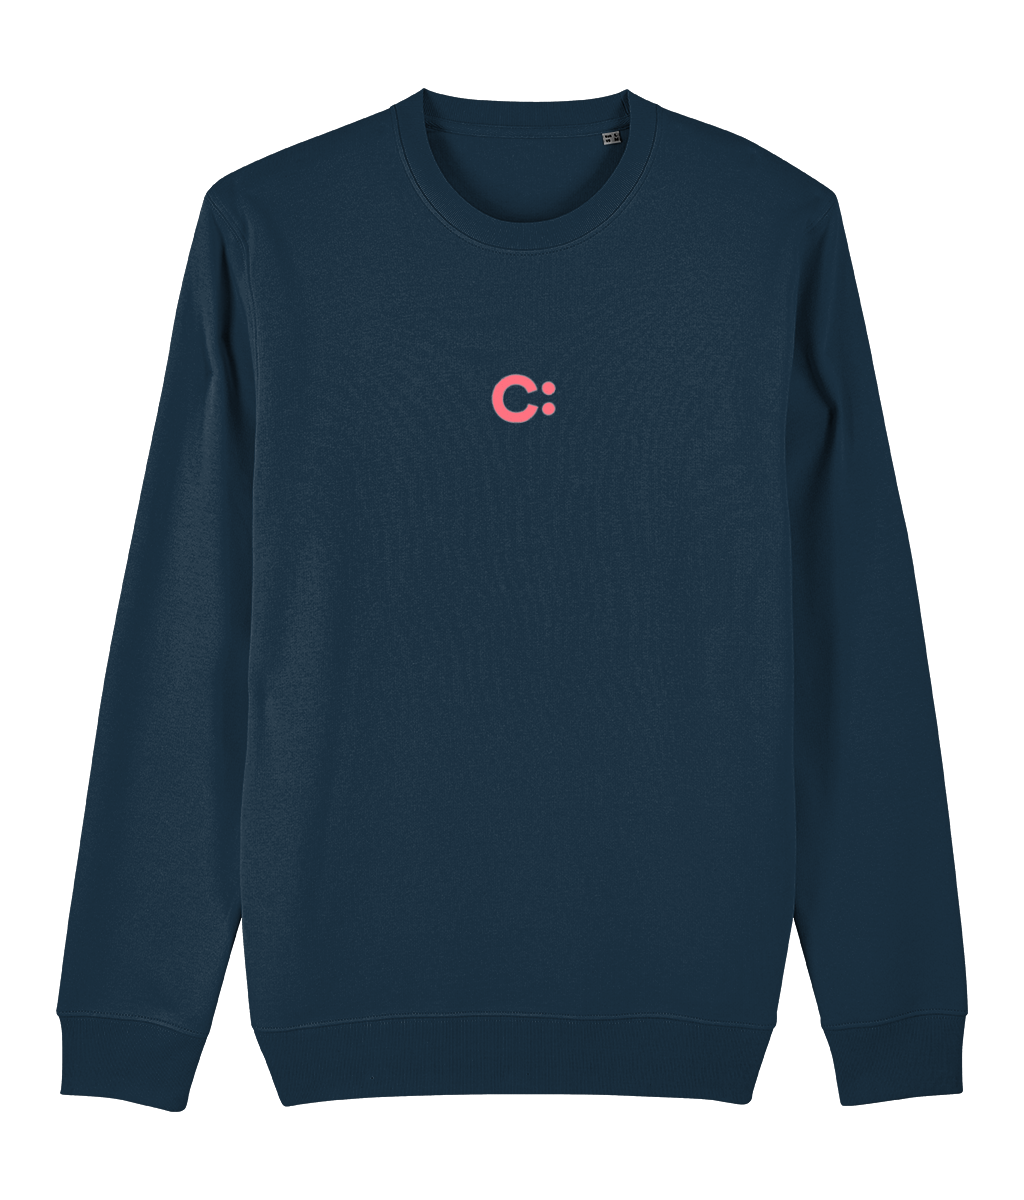 The 'C' Sweatshirt